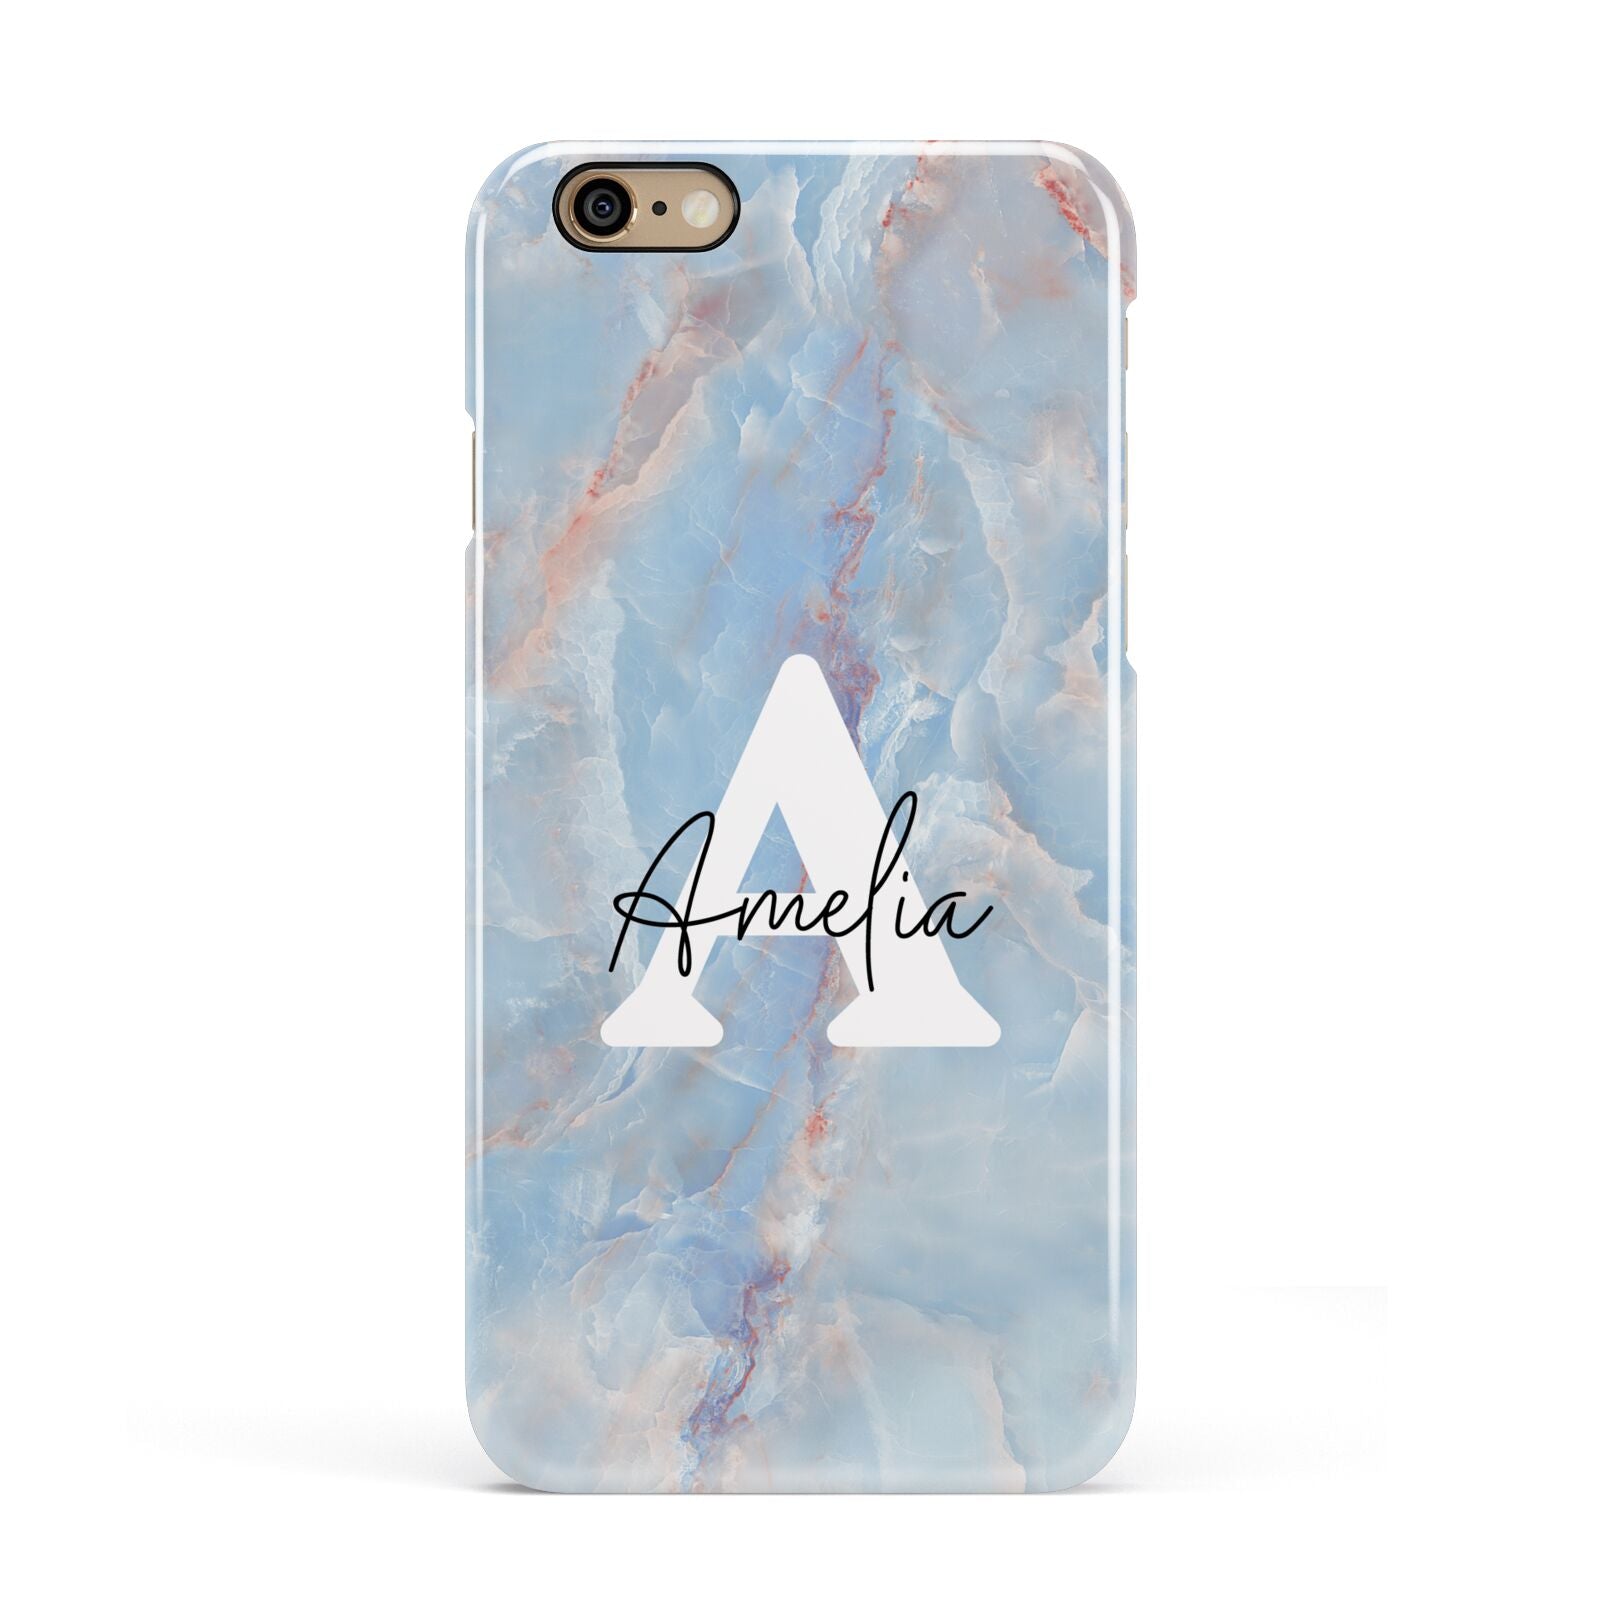 Blue Onyx Marble Apple iPhone 6 3D Snap Case